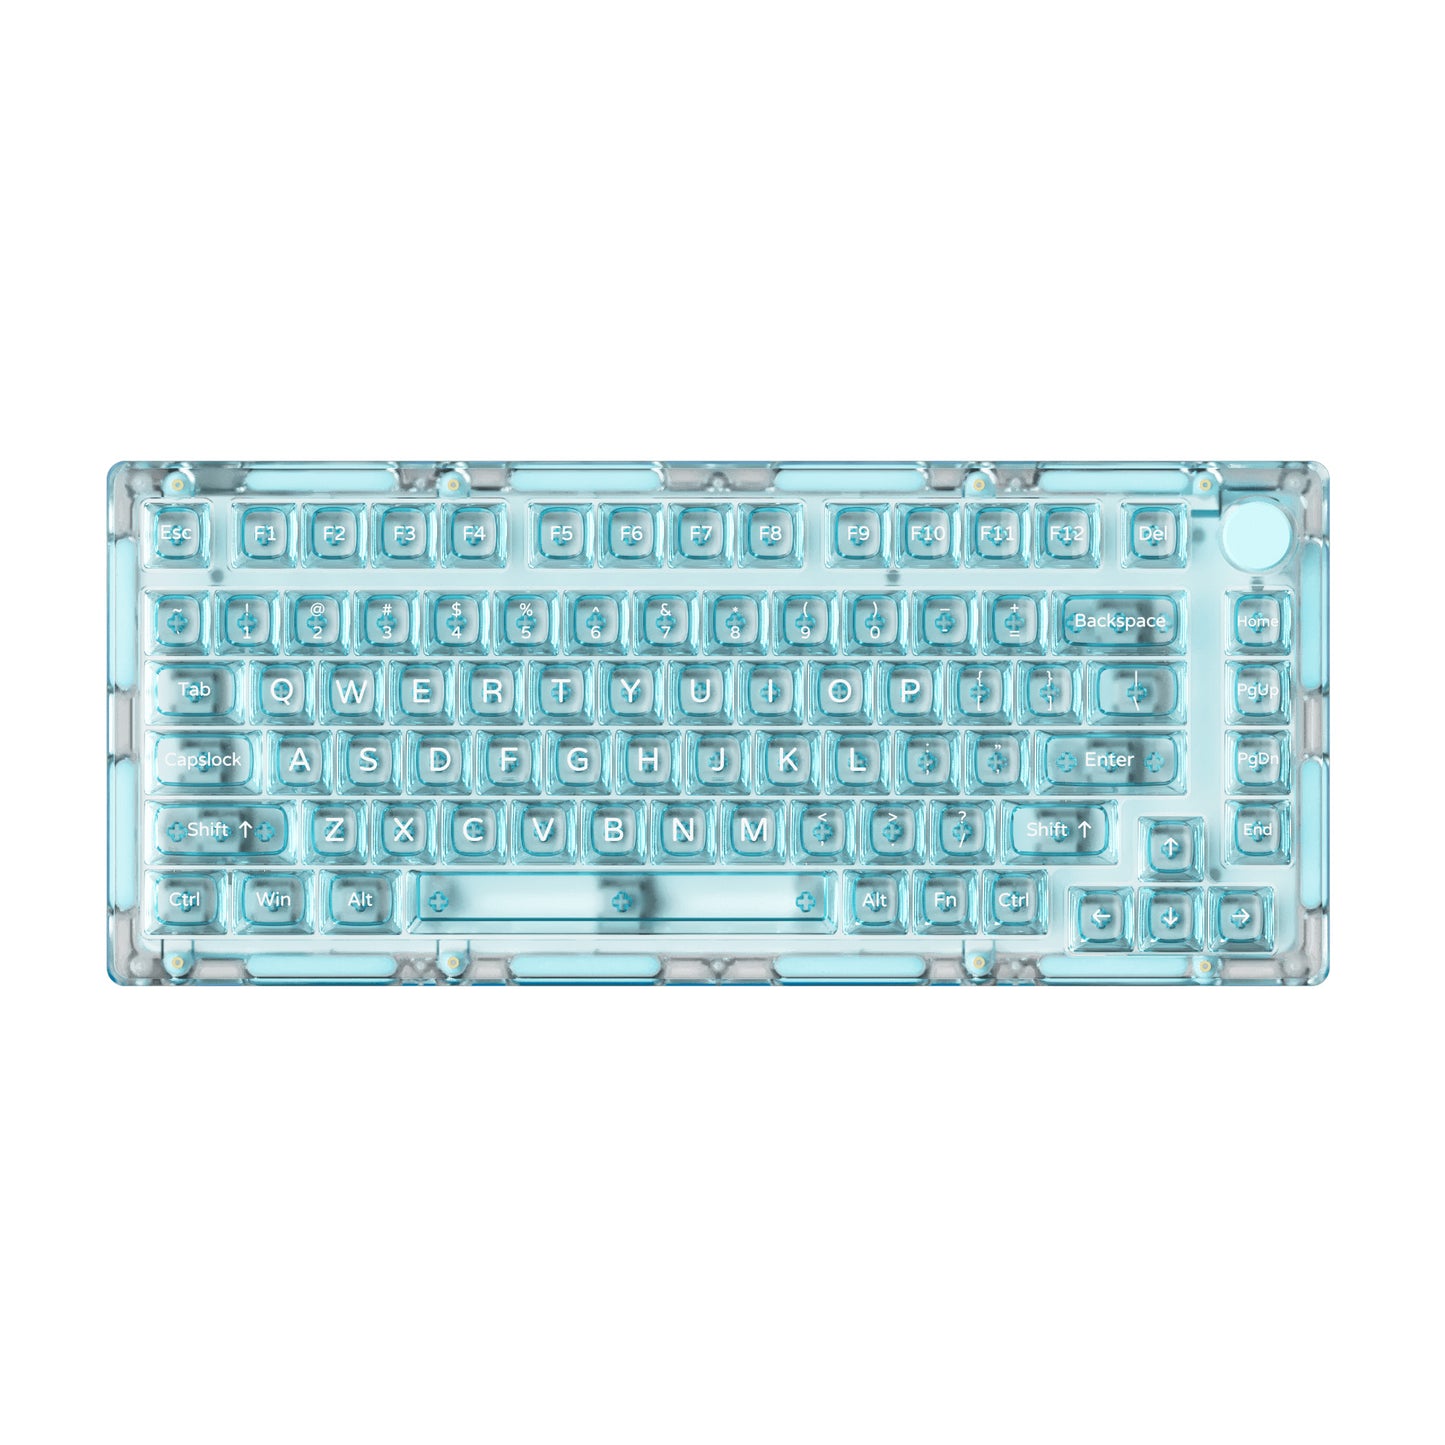 Monsgeek ICE75 Gasket Transparent Mechanical Keyboard